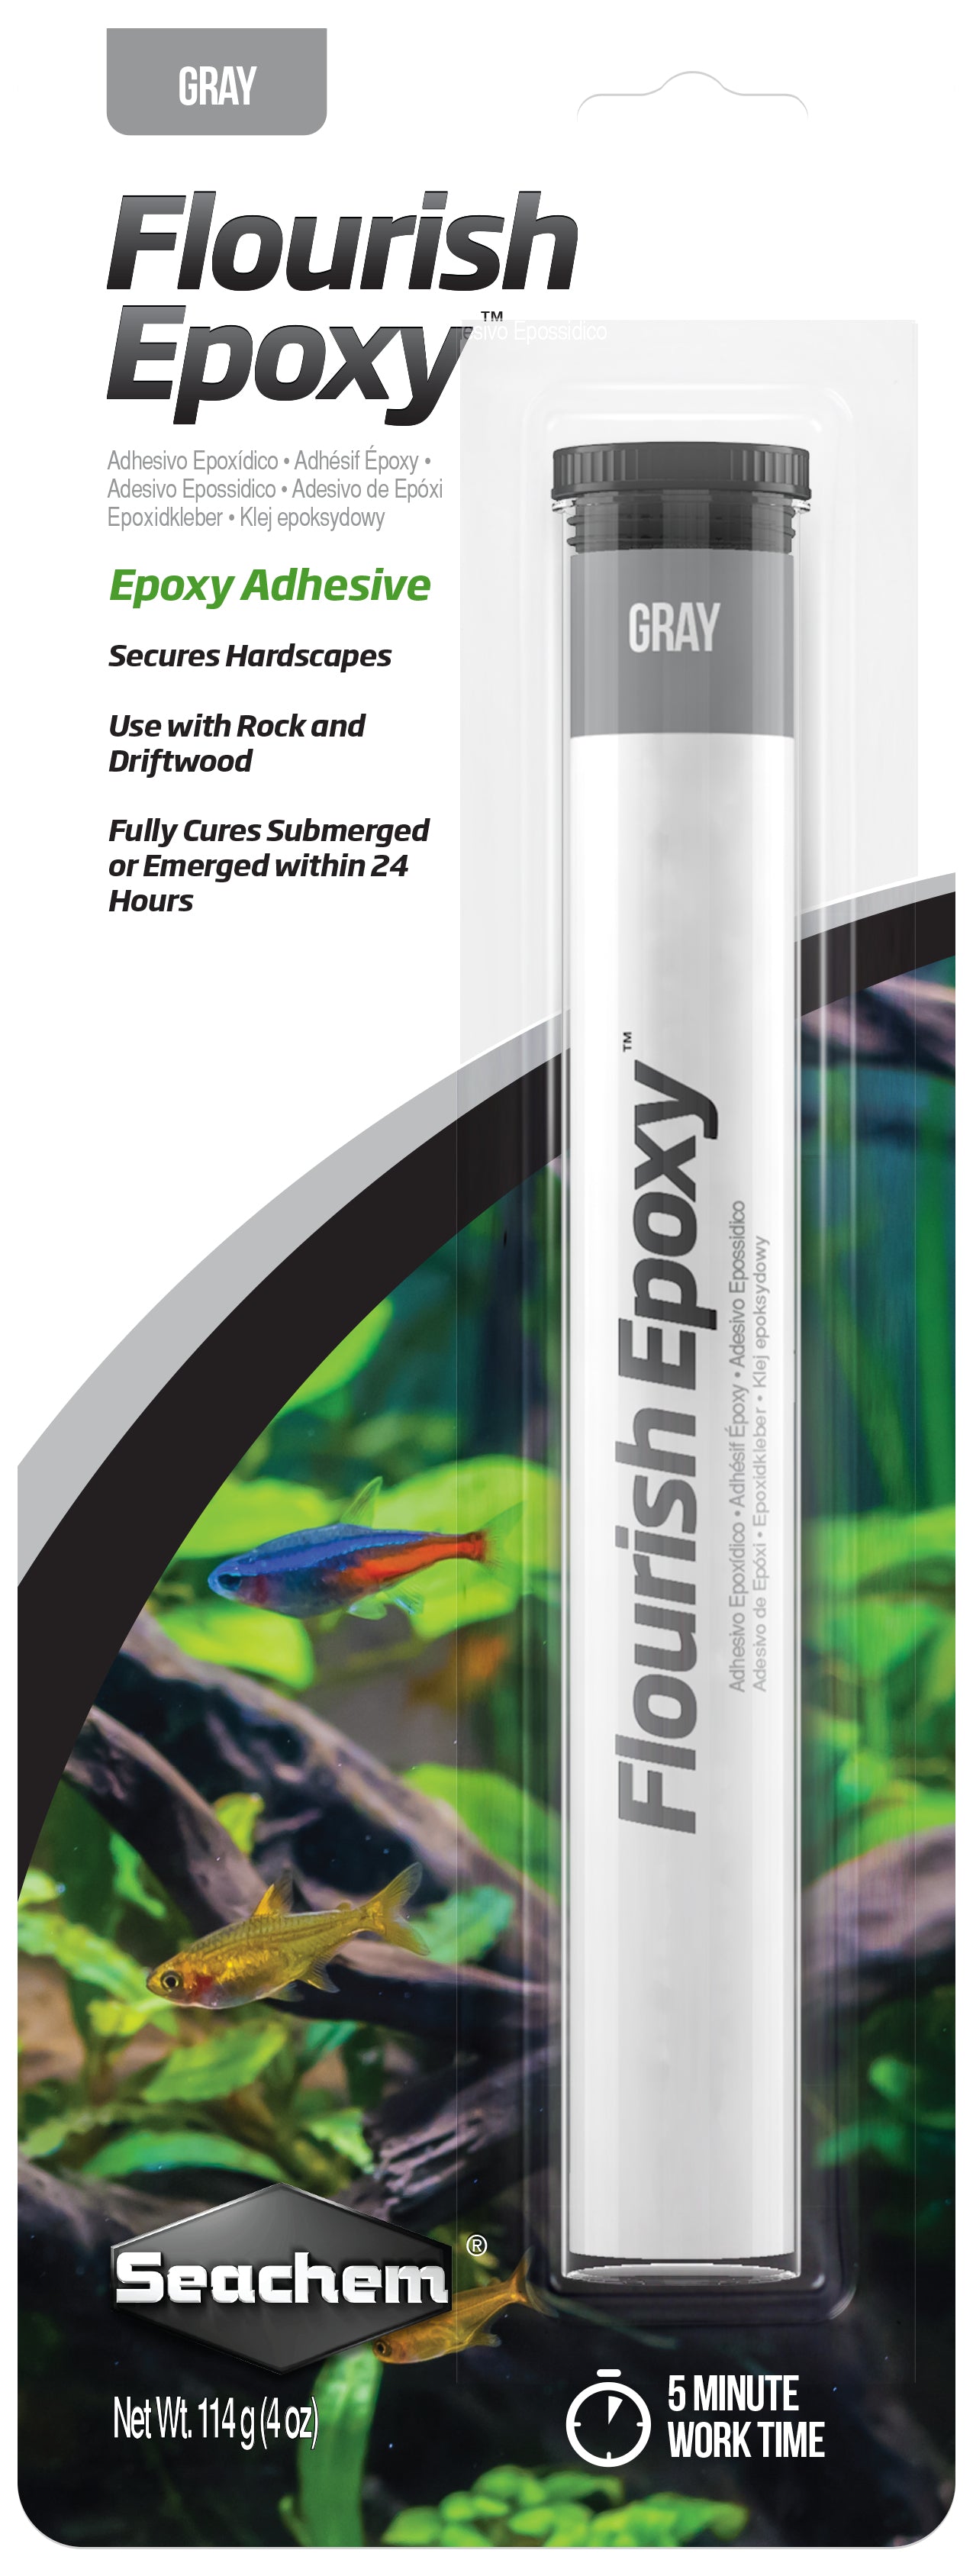 Seachem Flourish Epoxy Gray Adhesive for Securing Hardscapes in Aquariums